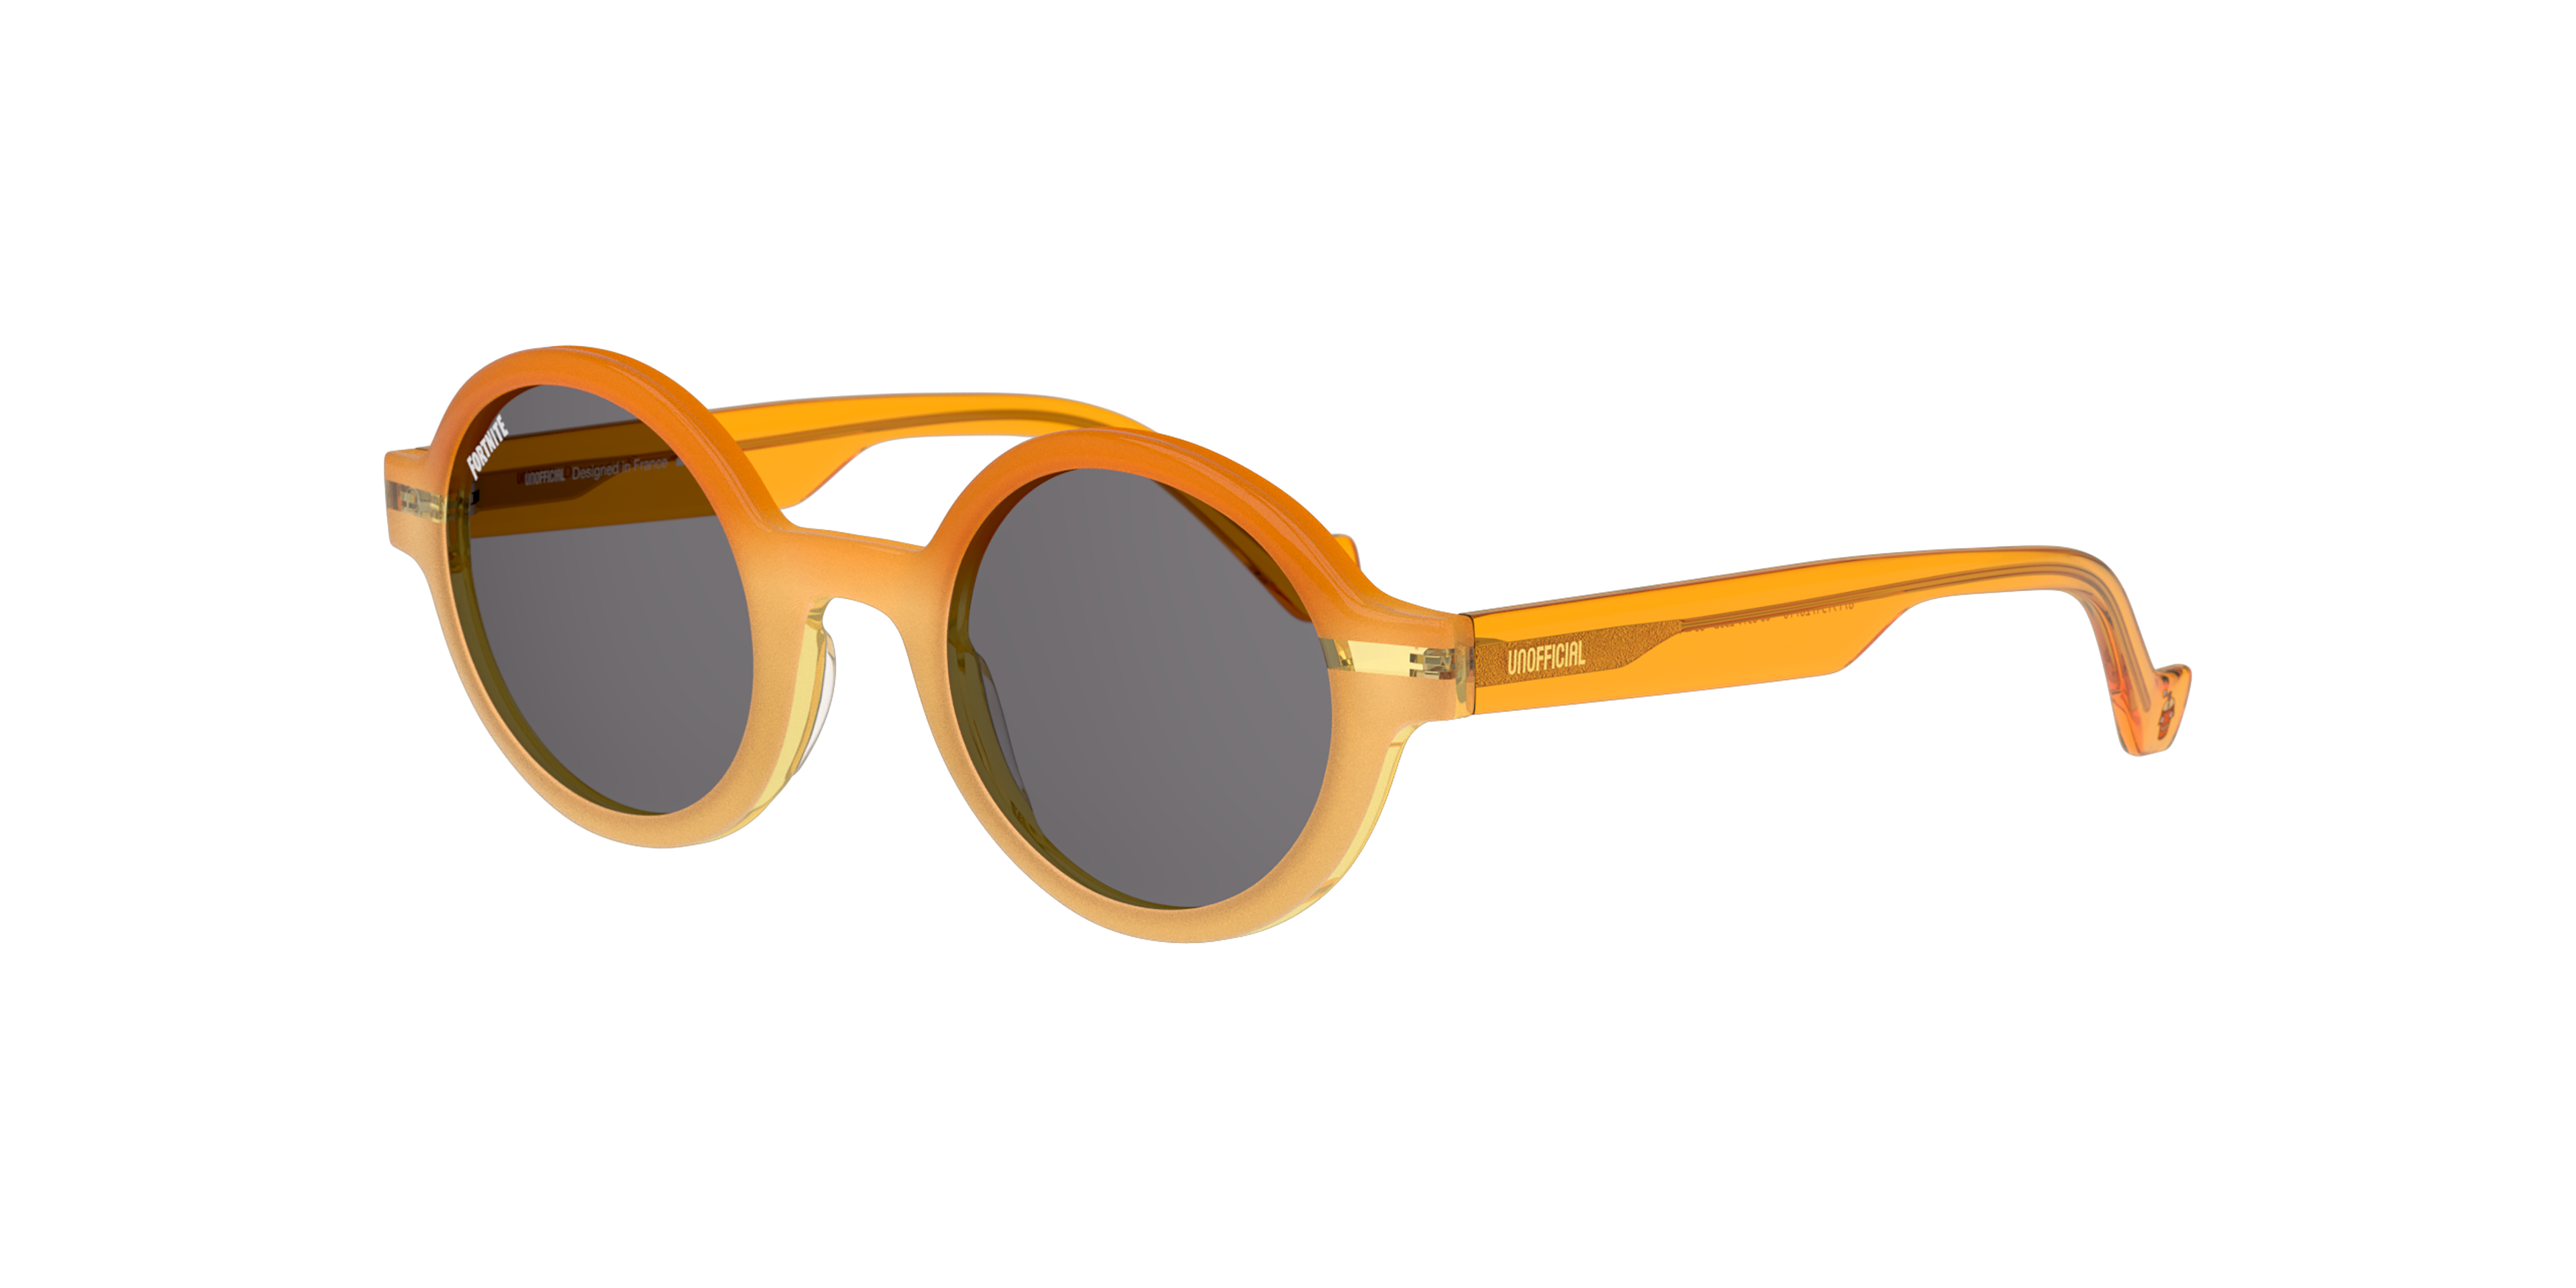 Angle_Left01 Fortnite with Unofficial UNSU0149 Sunglasses Grey / Orange